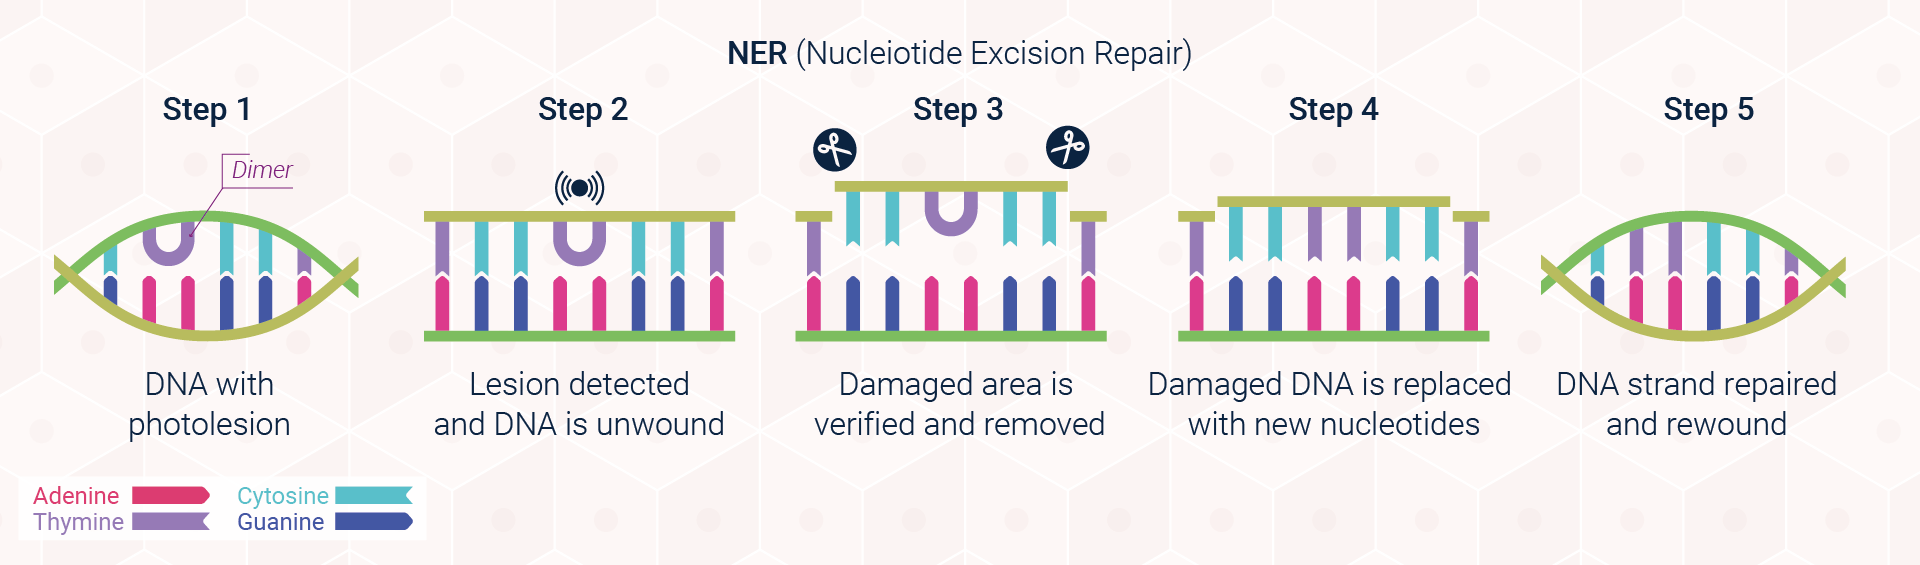 NER - Nucleotide excision repair